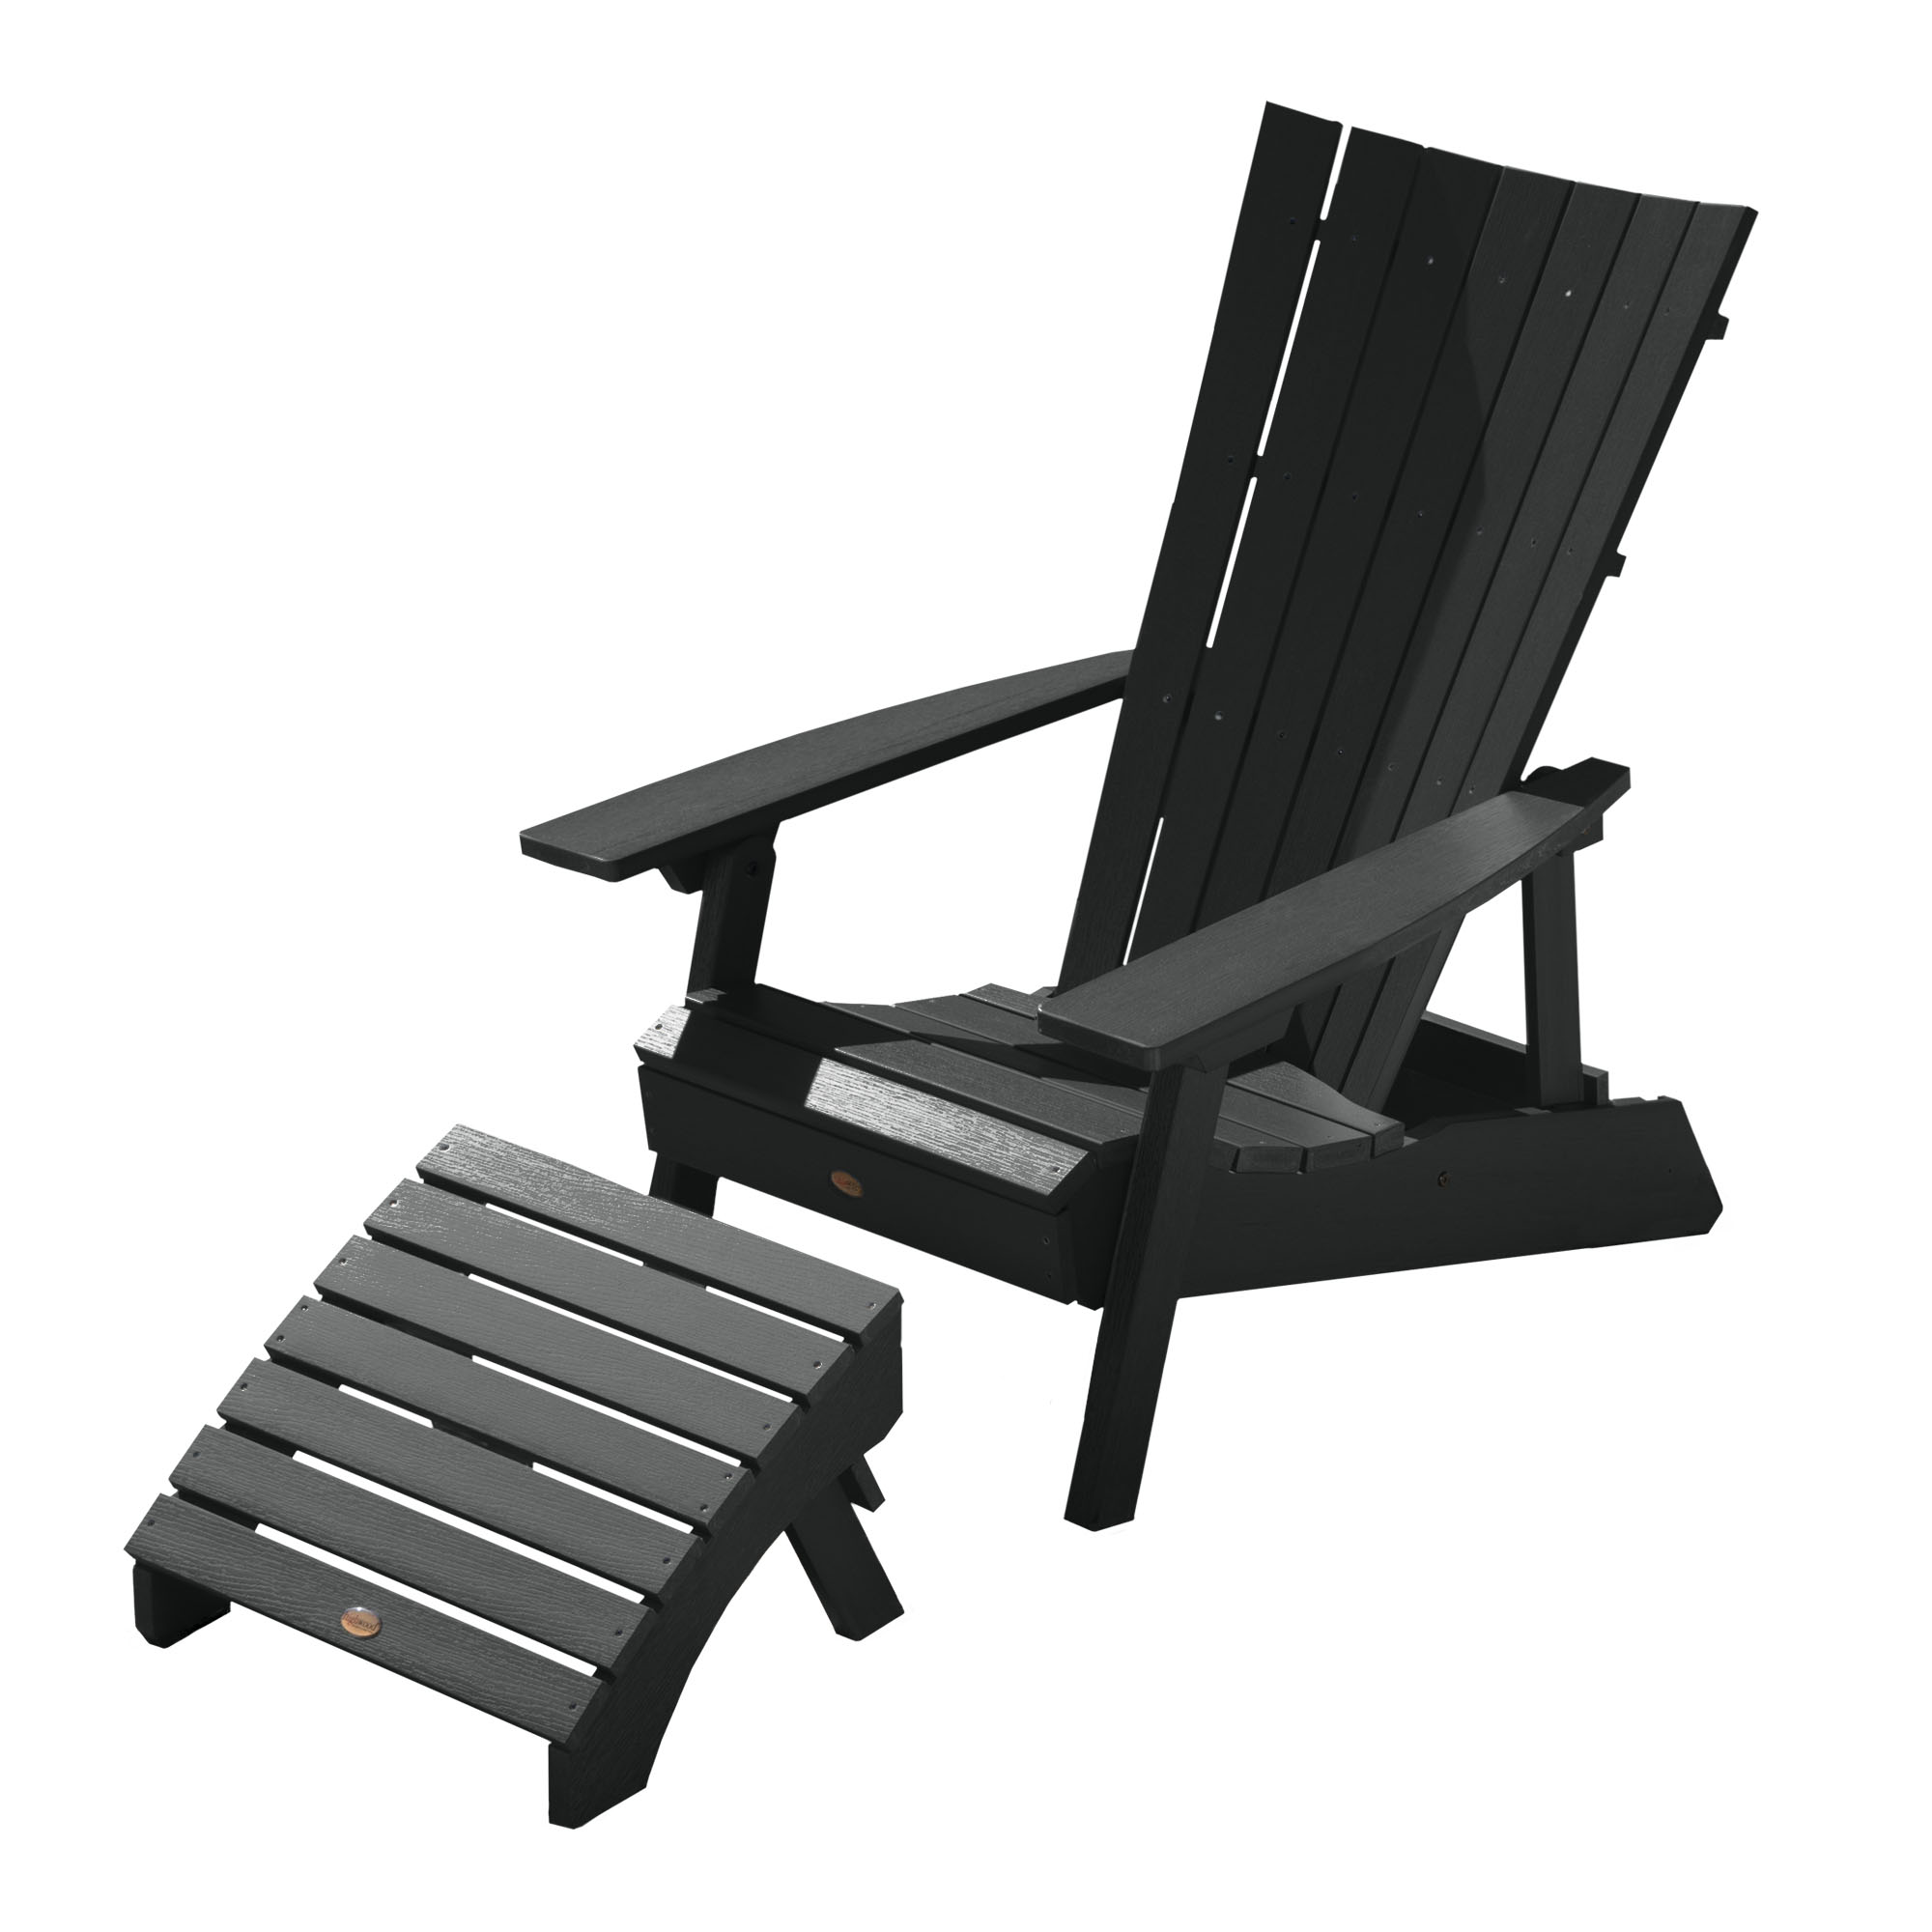 Highwood Manhattan Beach Adirondack Chair with Folding Ottoman - image 1 of 6